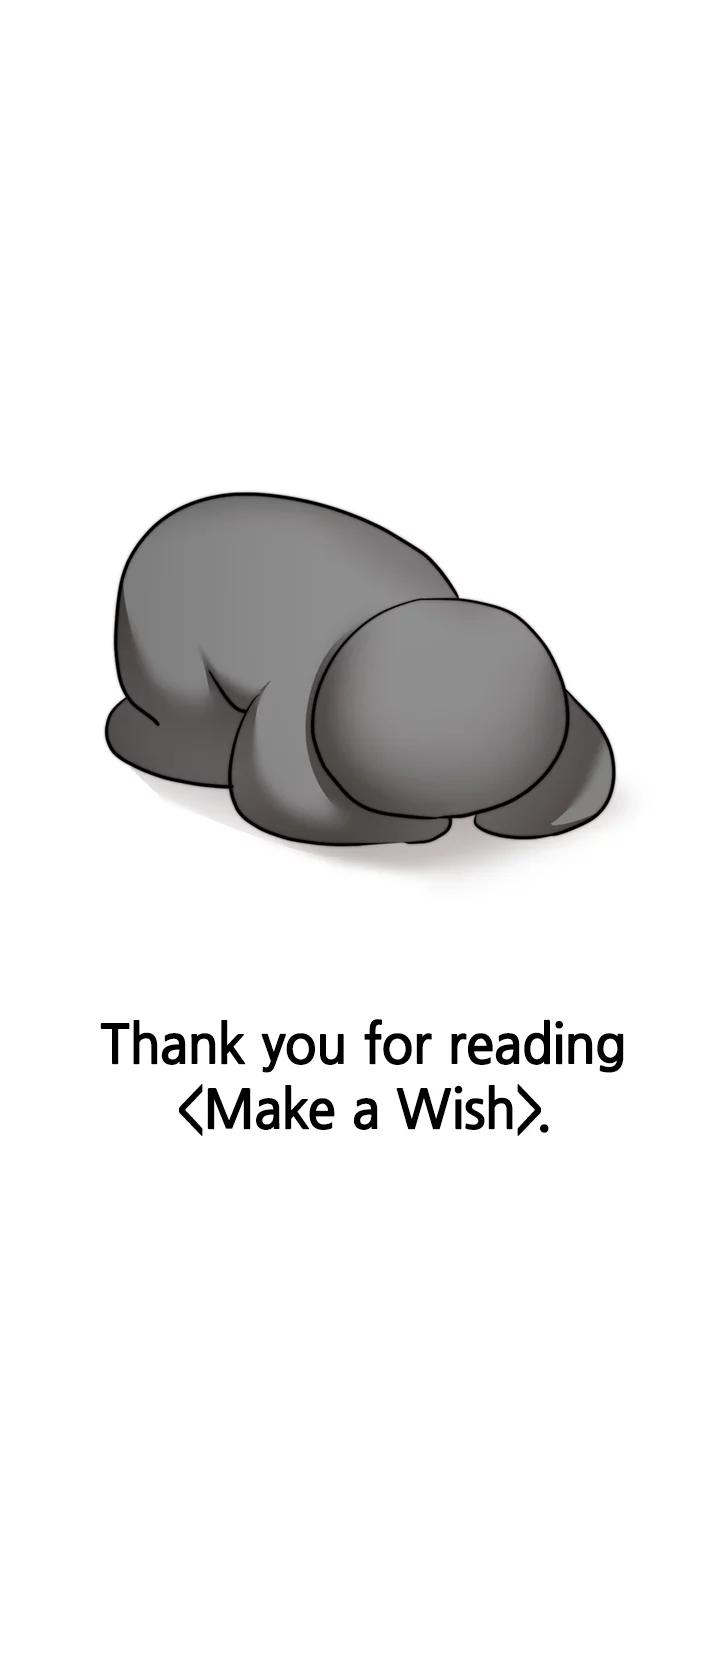 Make a Wish image